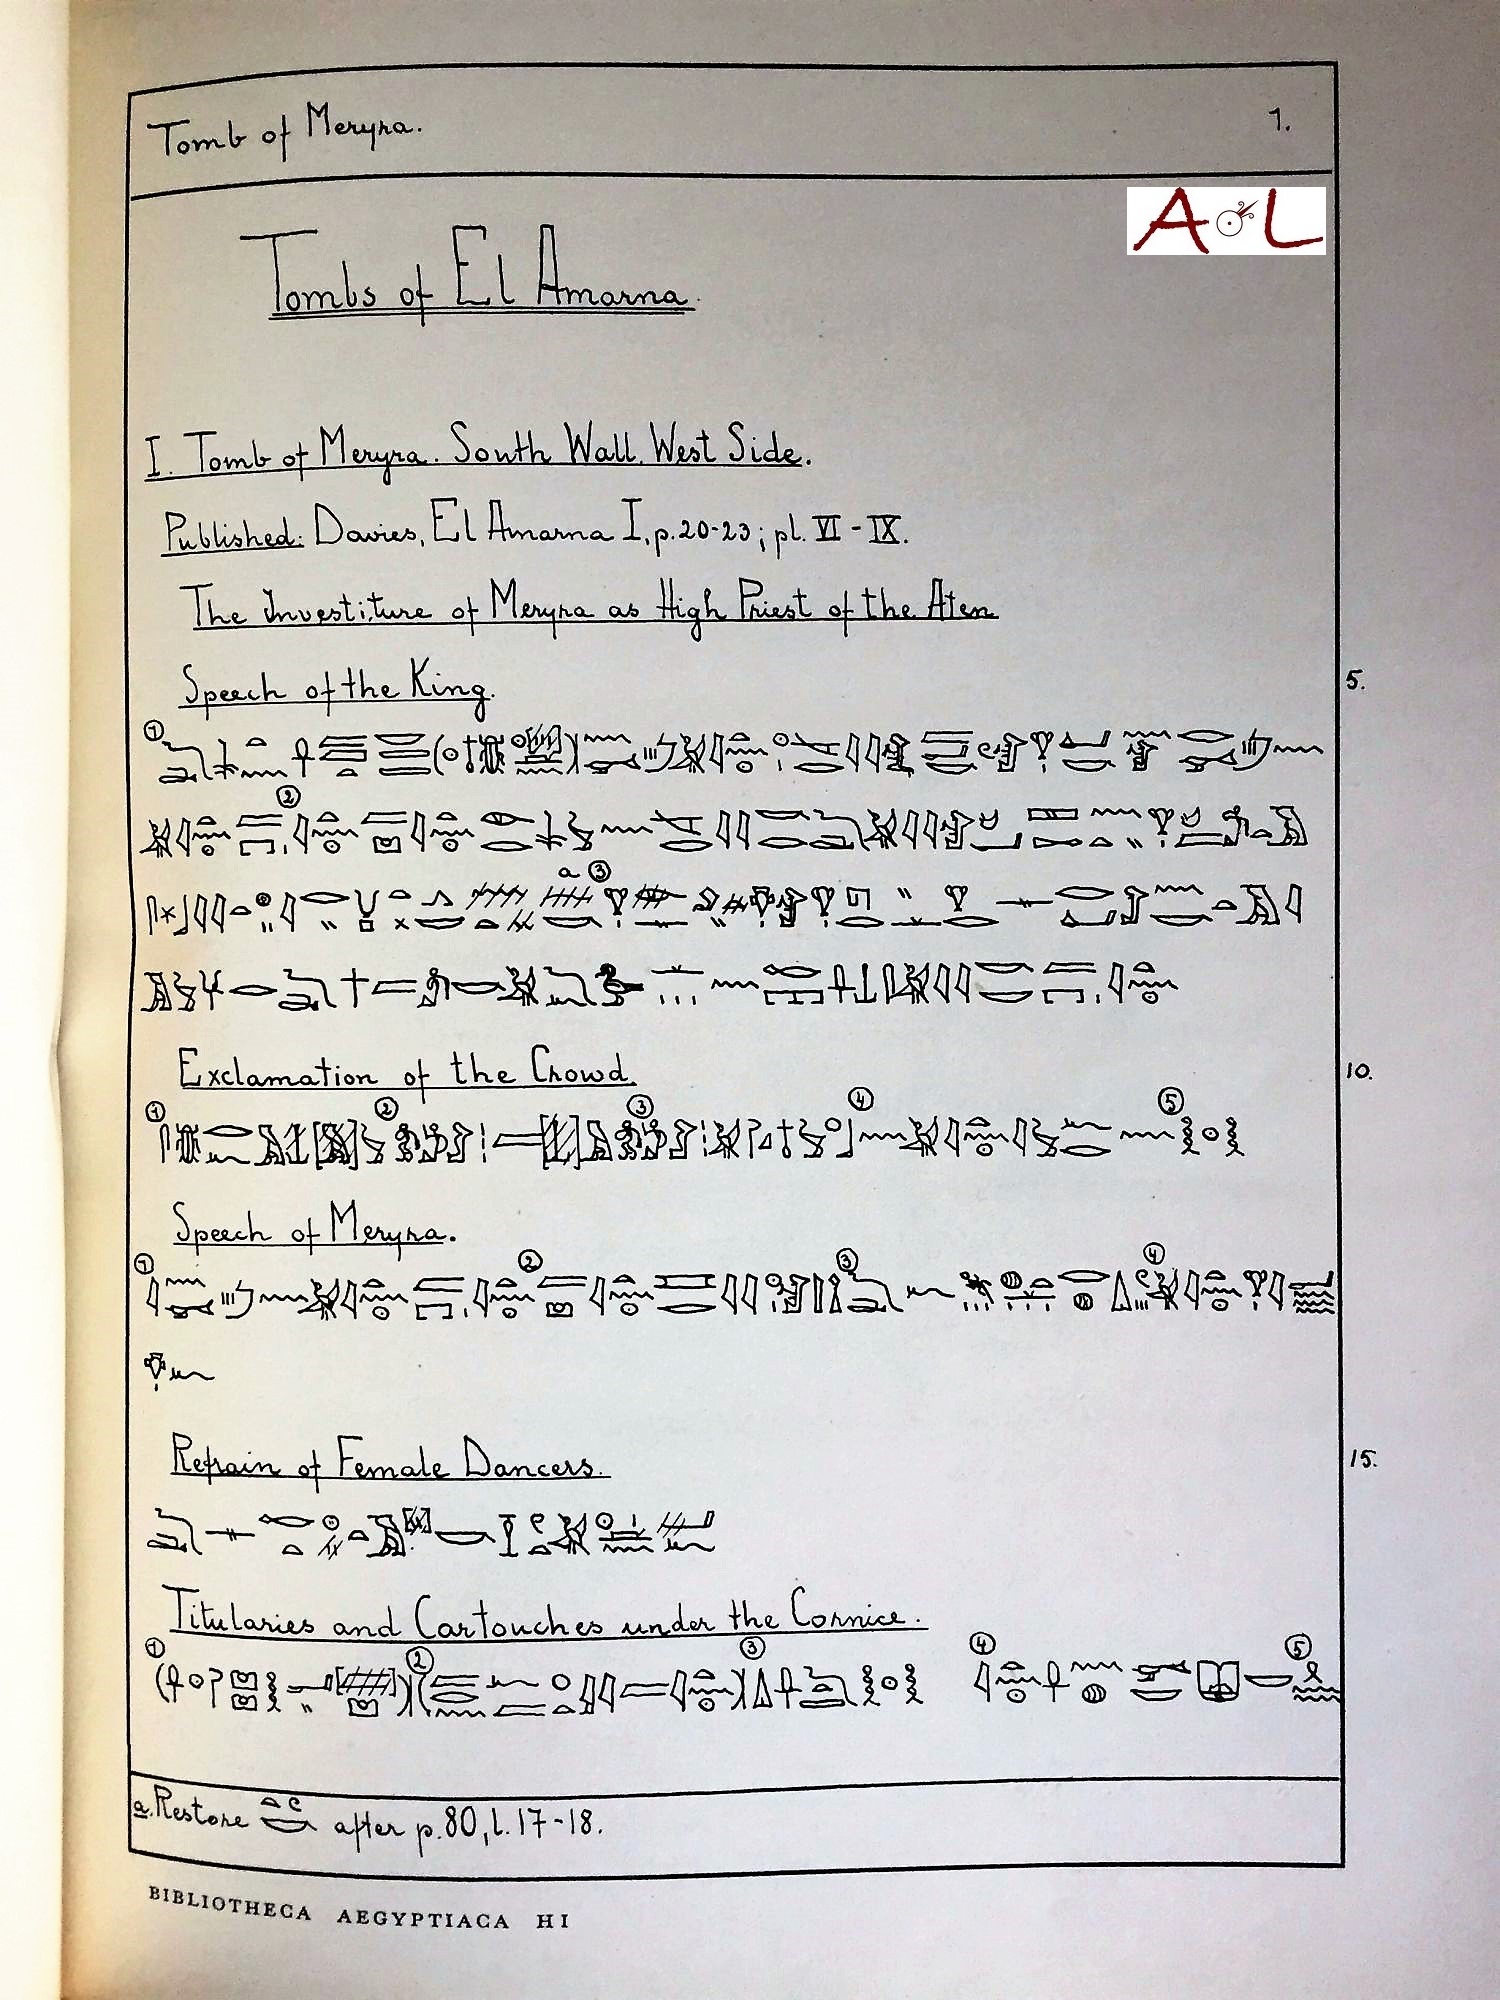 Texts from the time of Akhenaten property of Bibliotheca Aegyptiaca H1 by Sandmen 1938 pg 2